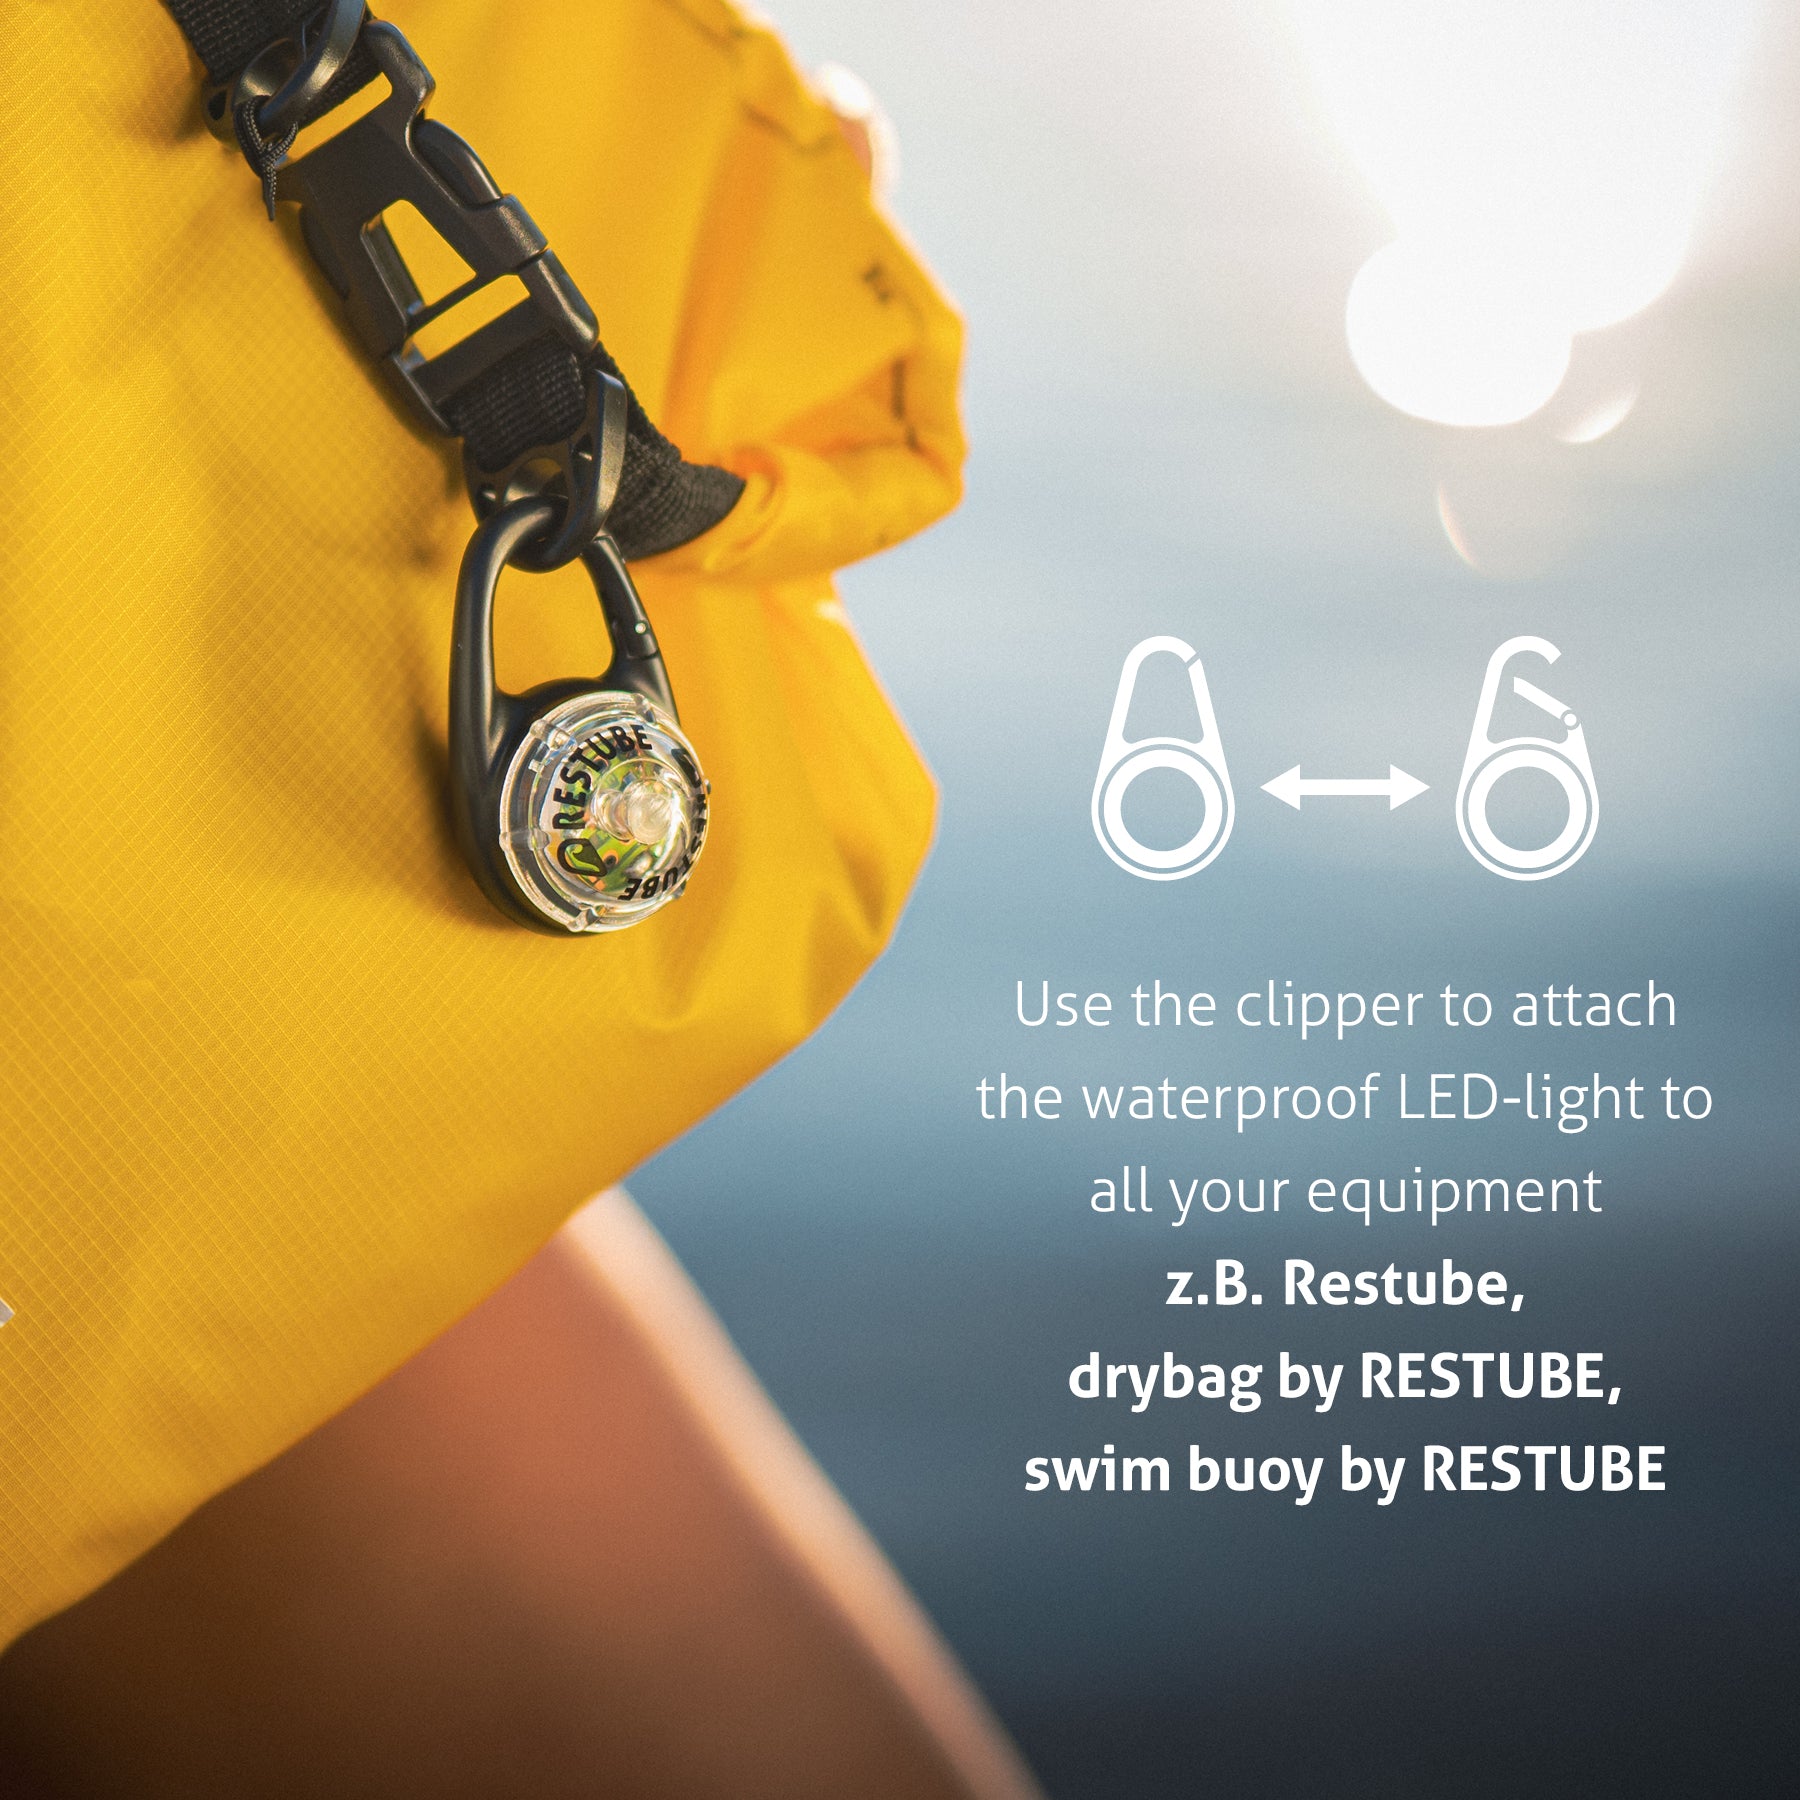 Waterproof LED safety light by RESTUBE